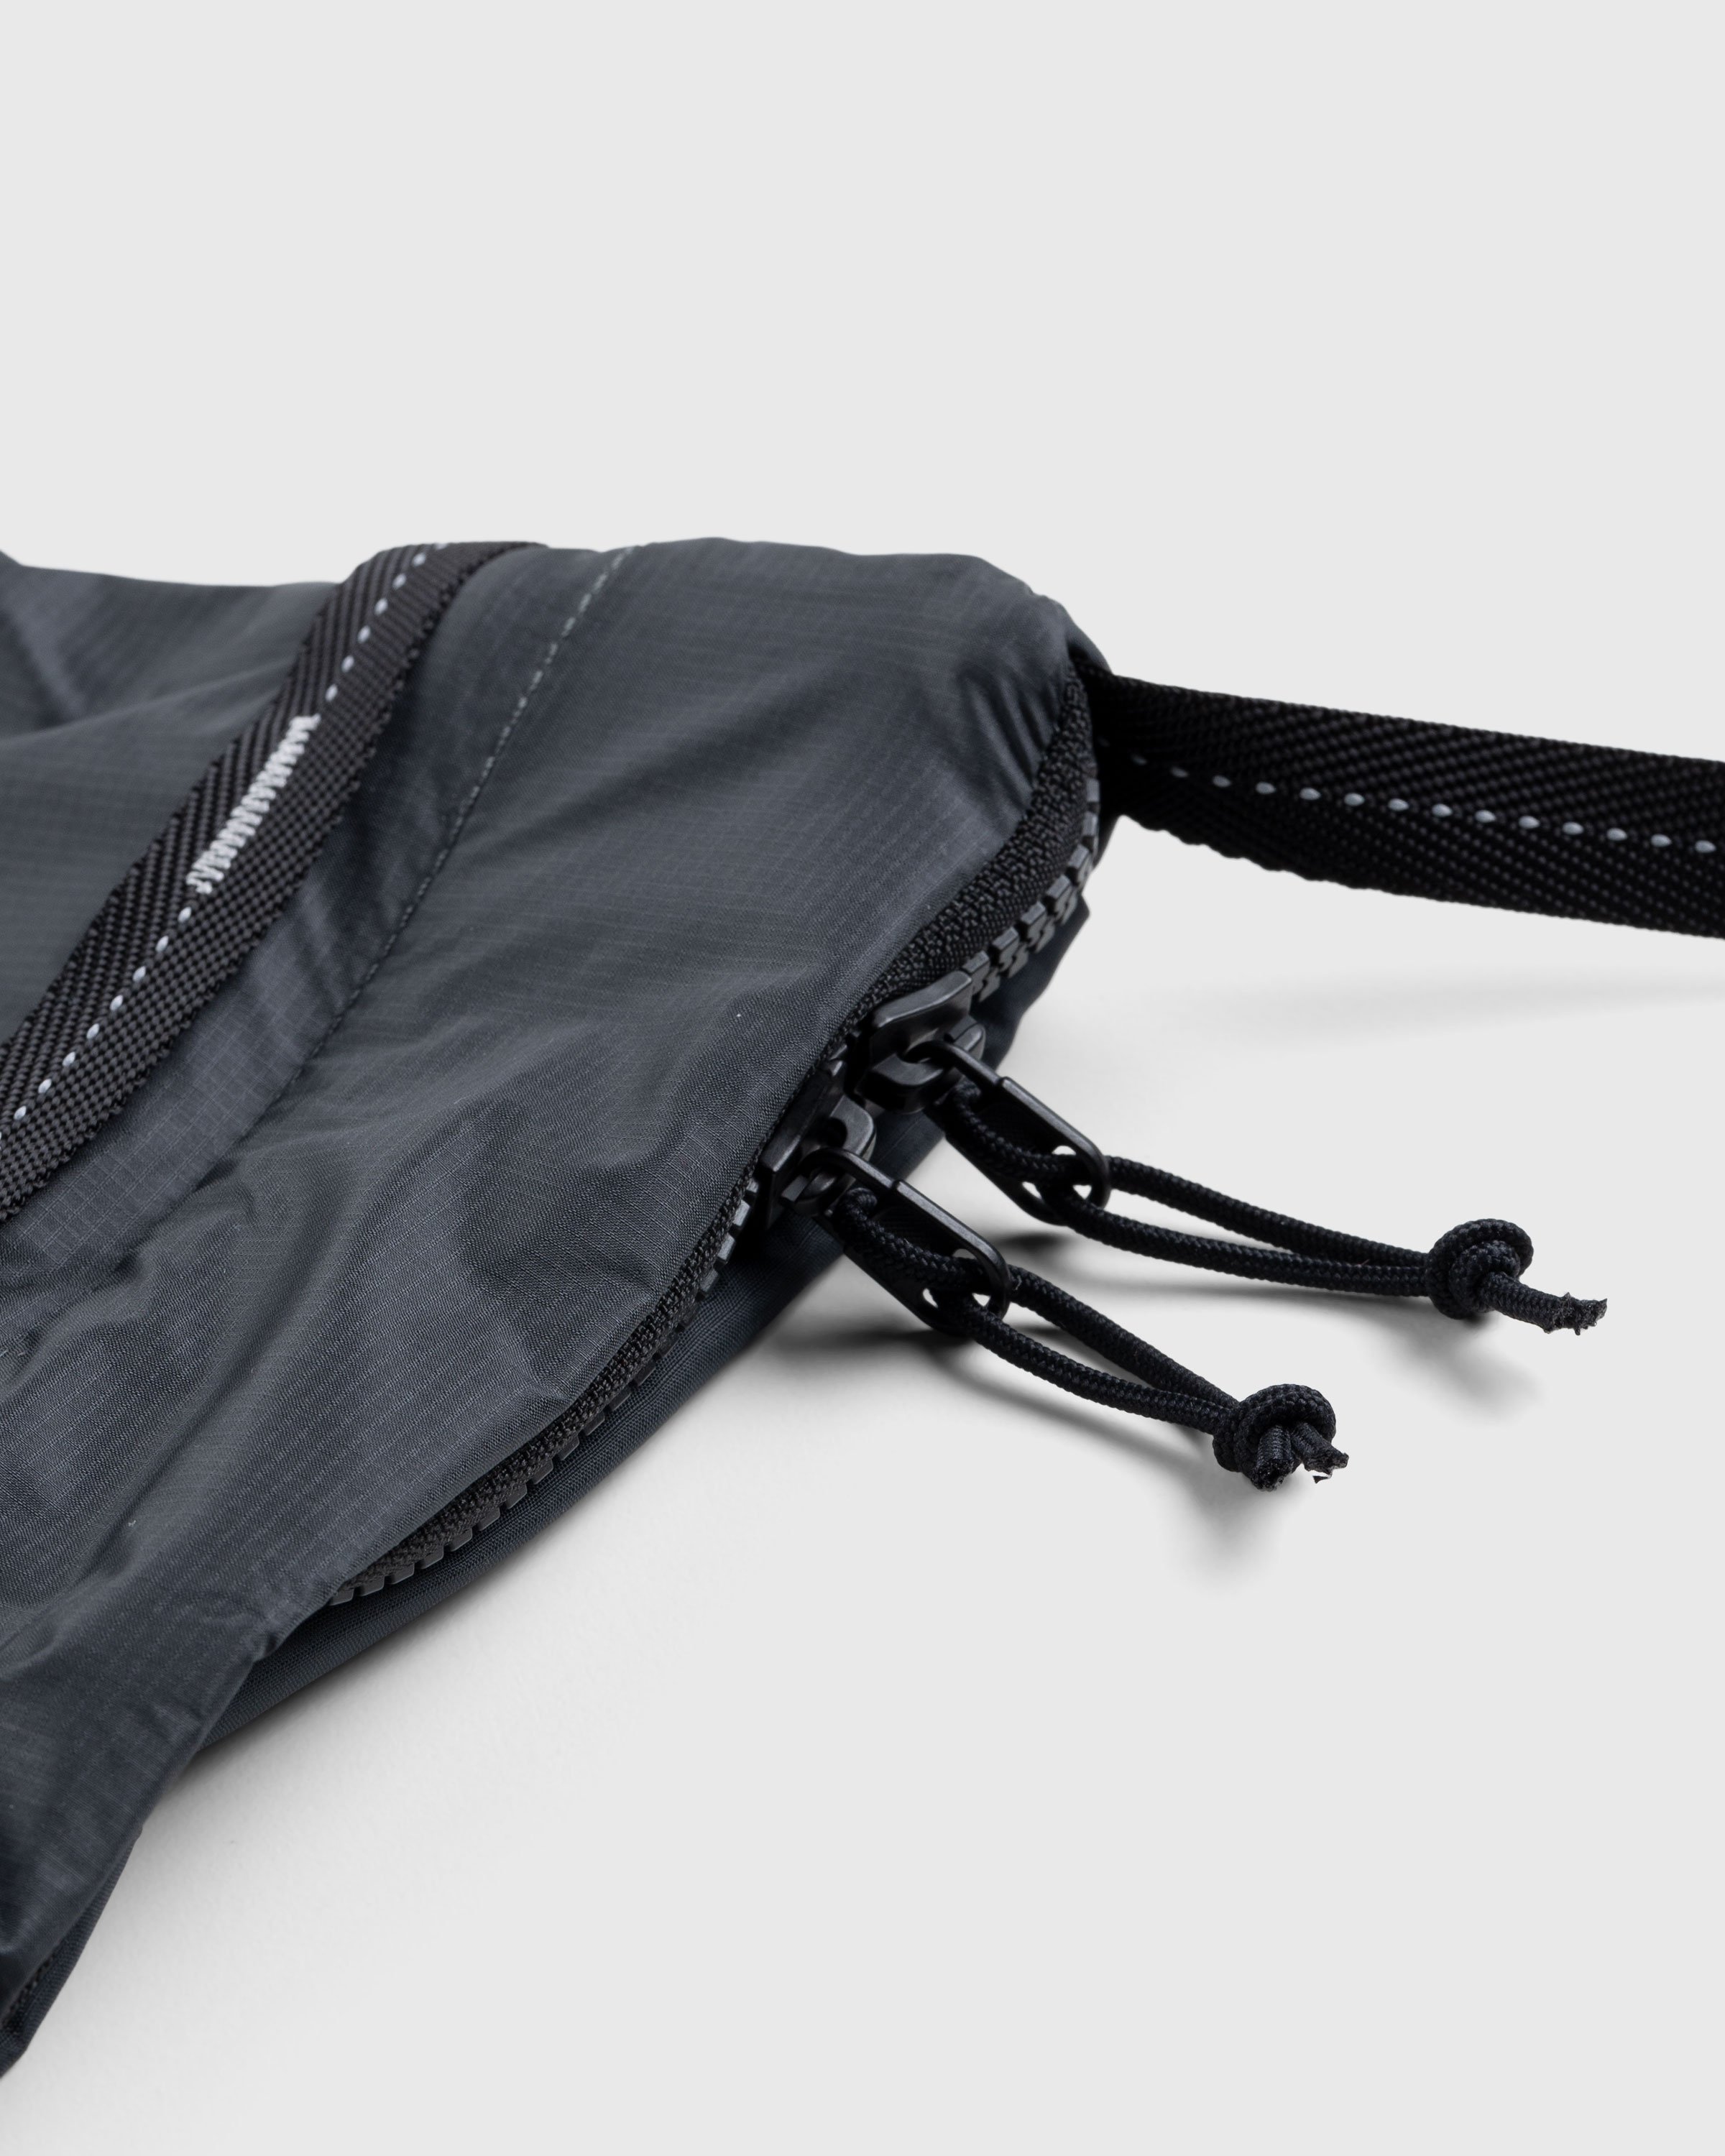 The North Face - Flyweight Shoulder Bag Grey/Black - Accessories - Grey - Image 3